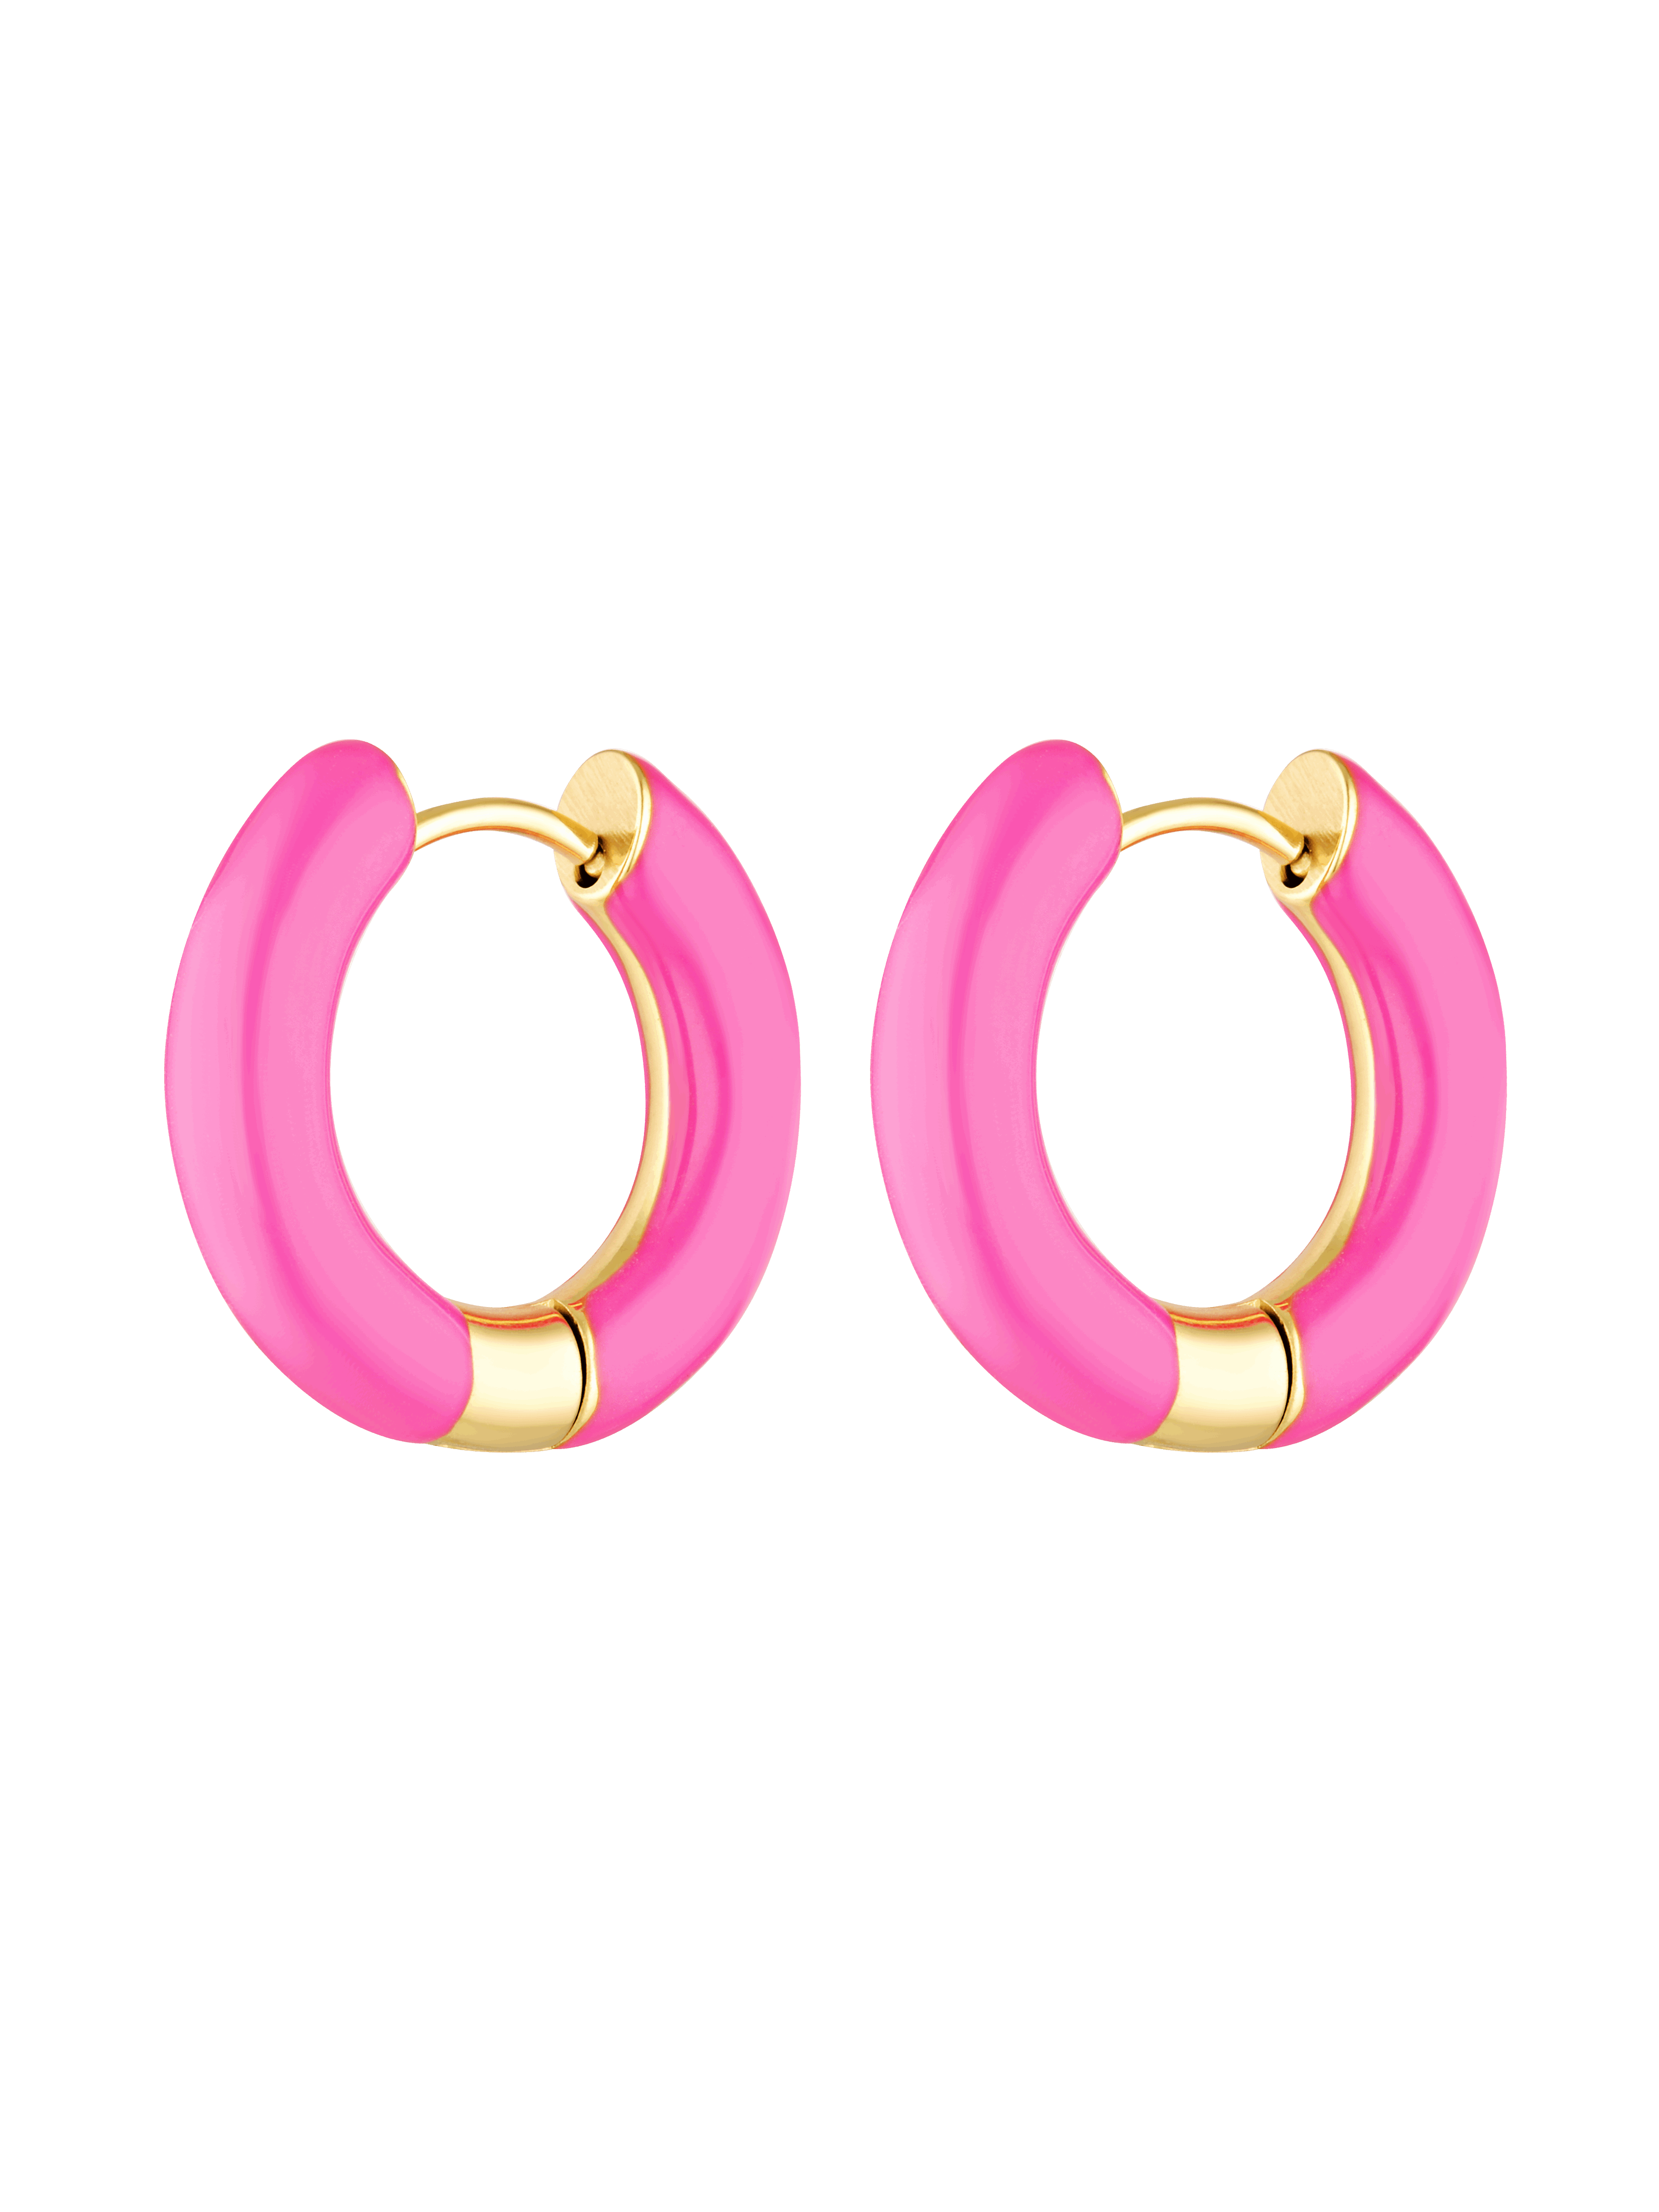 Fun gold fill hoop earrings with pink enamel coating